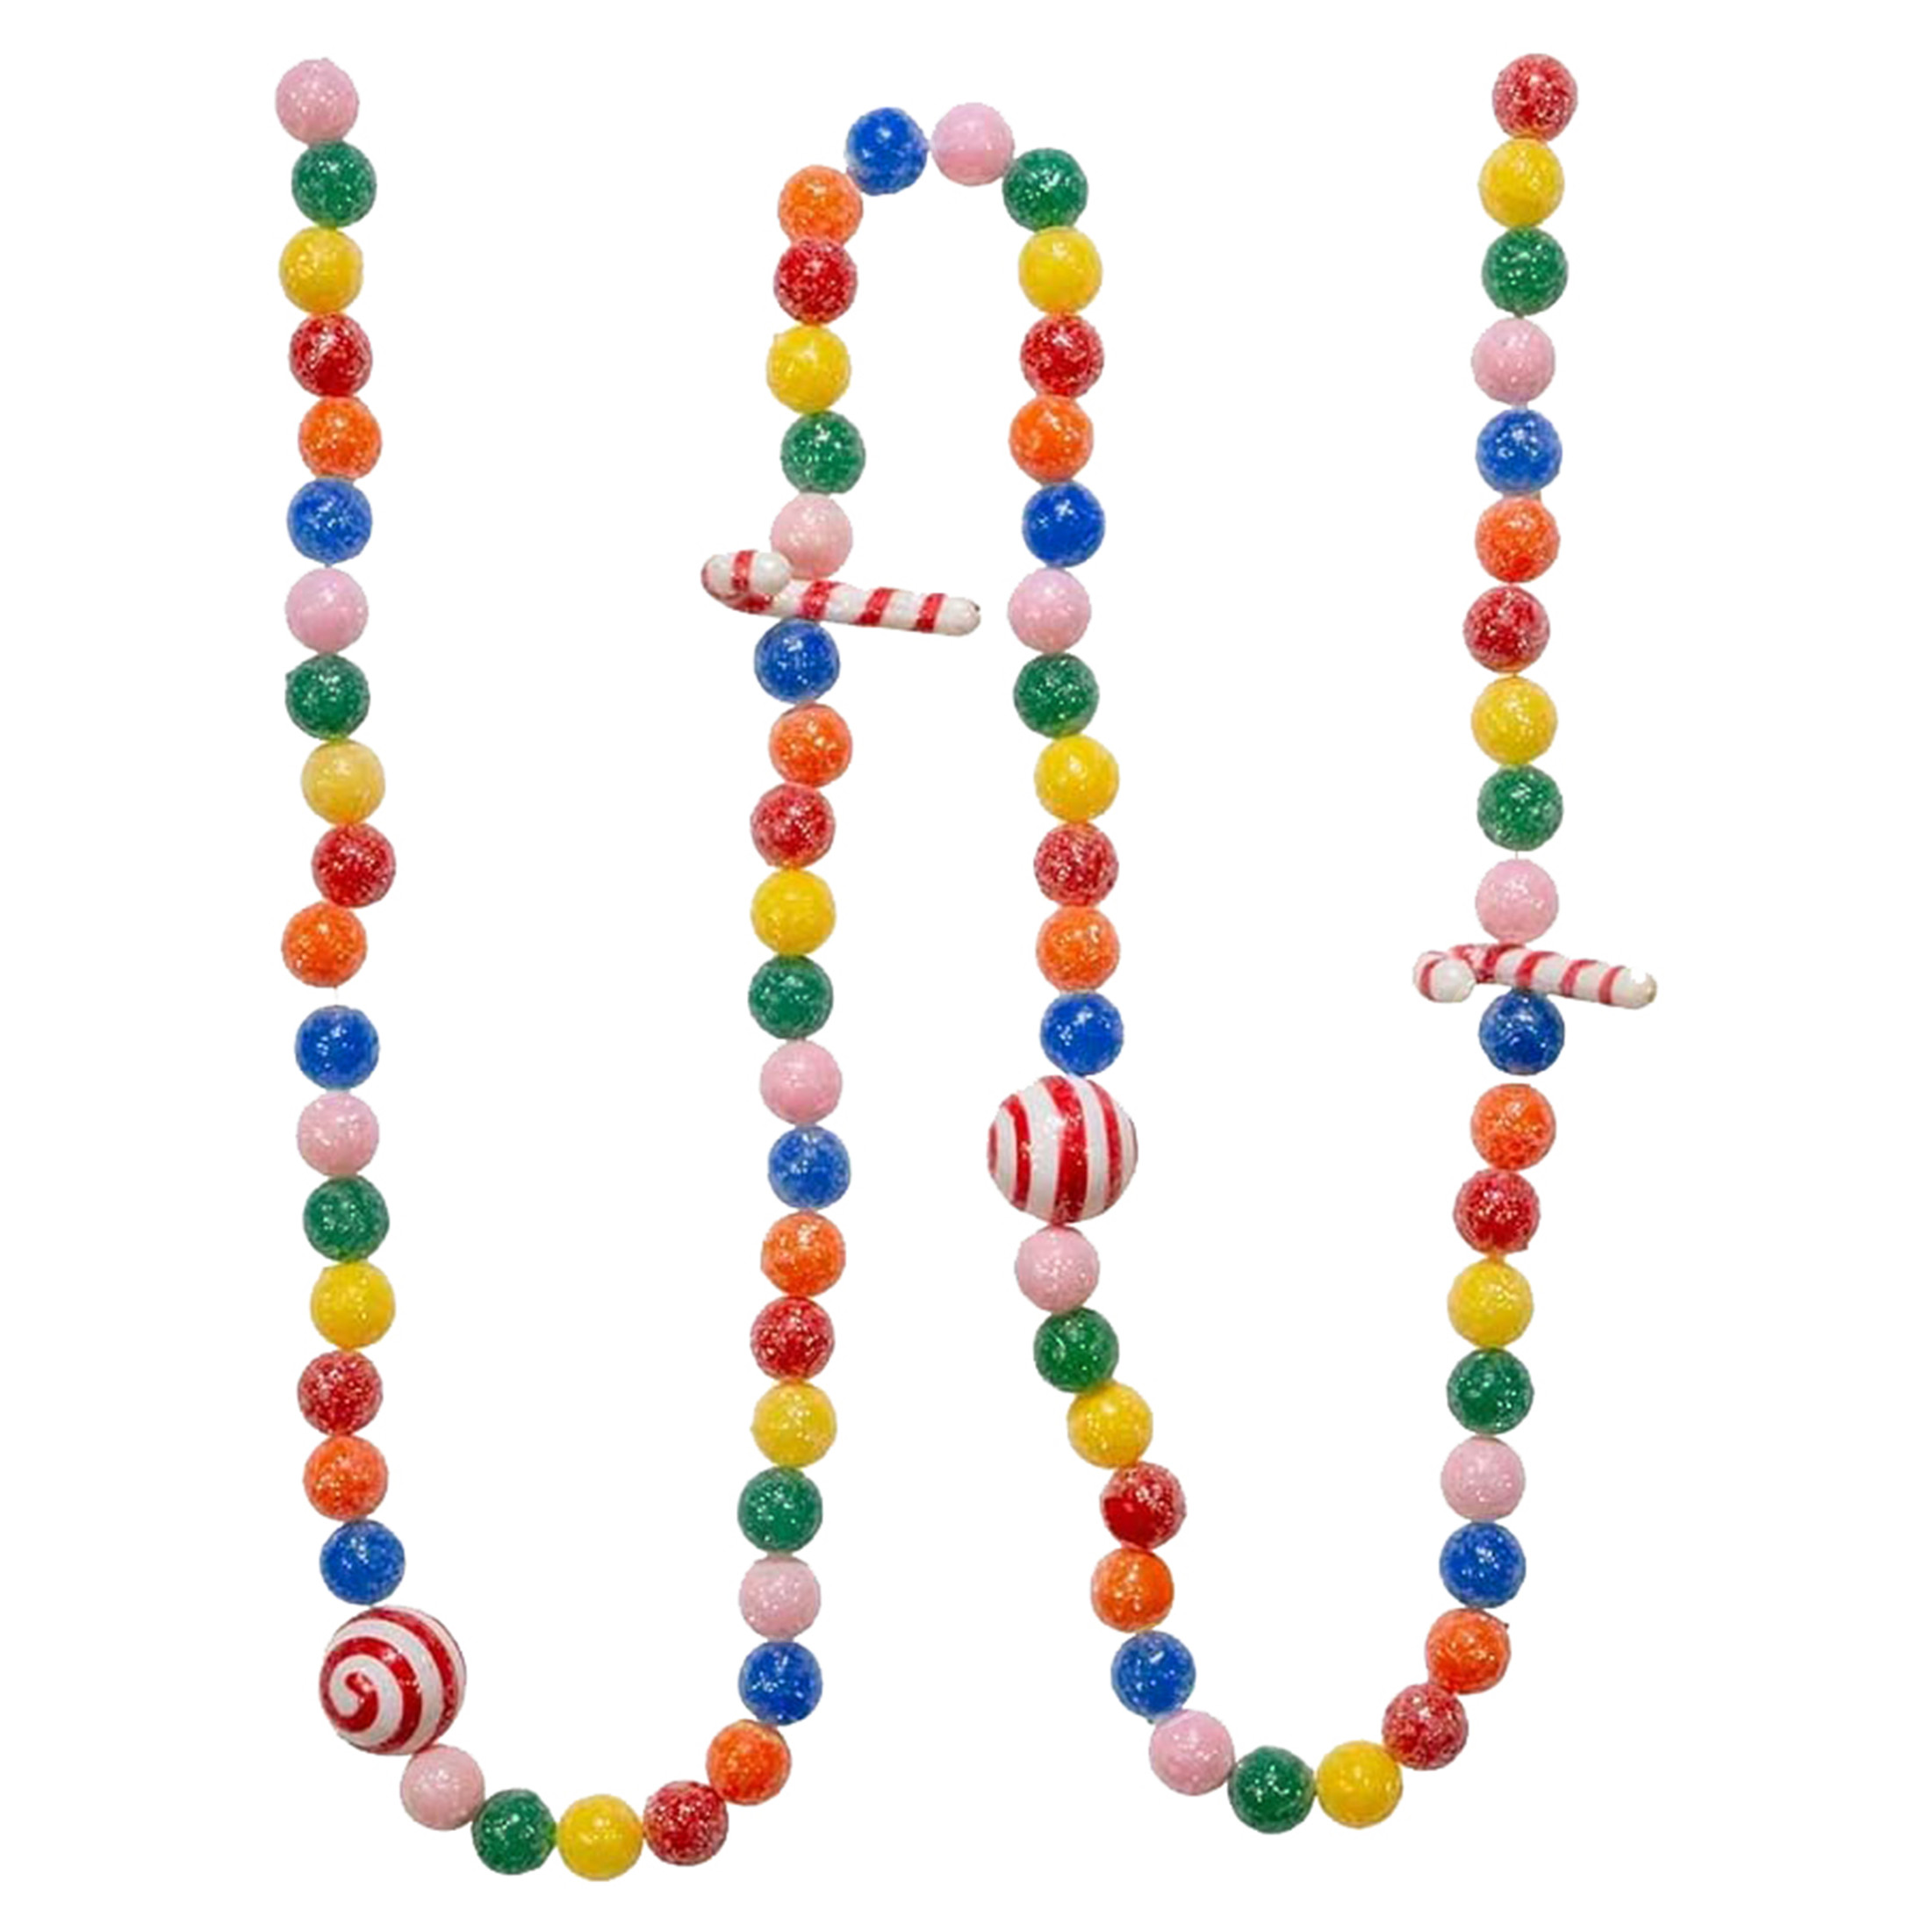 Kurt S. Adler Candy Themed Plastic Garland, Multicolor, 6 Feet Long